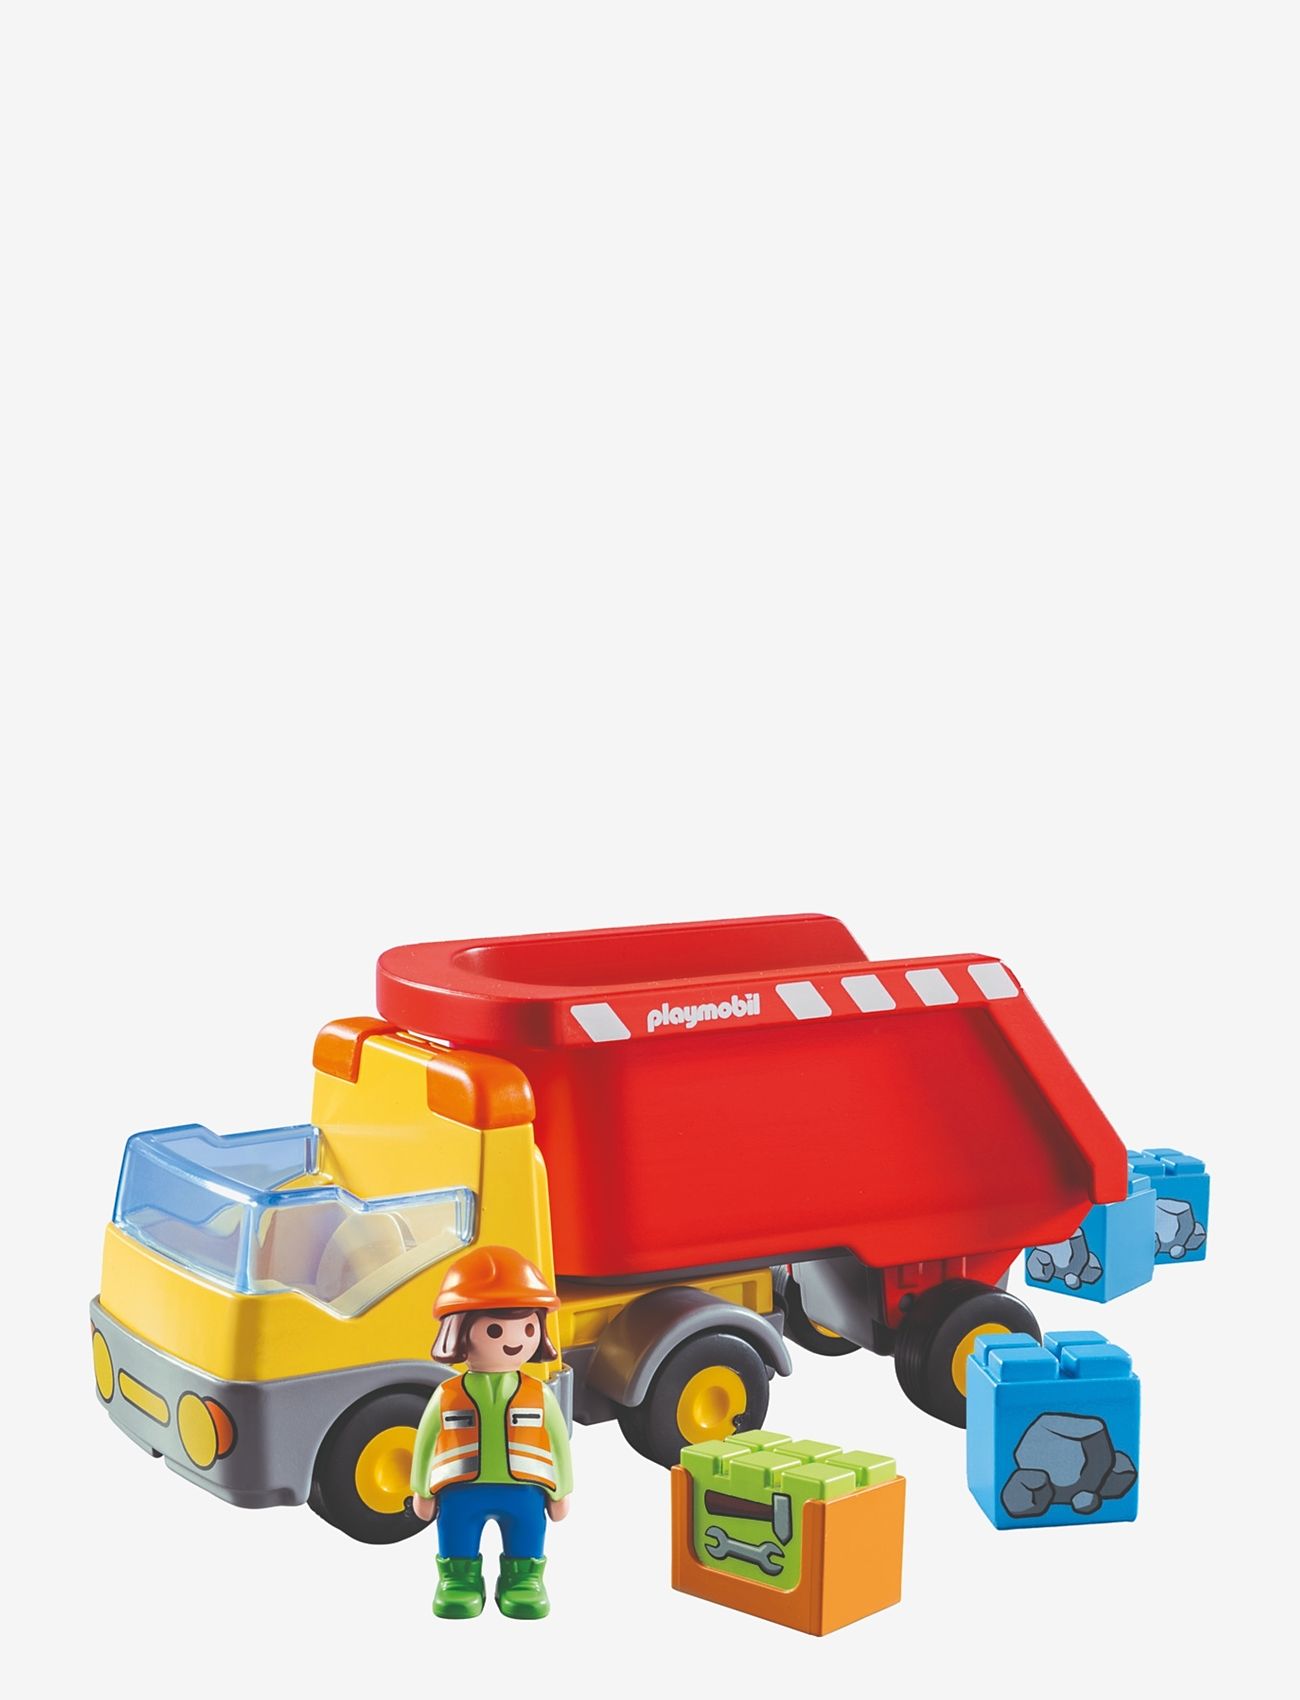 PLAYMOBIL - PLAYMOBIL 1.2.3 Dump Truck - 70126 - playmobil 1.2.3 - multicolored - 1